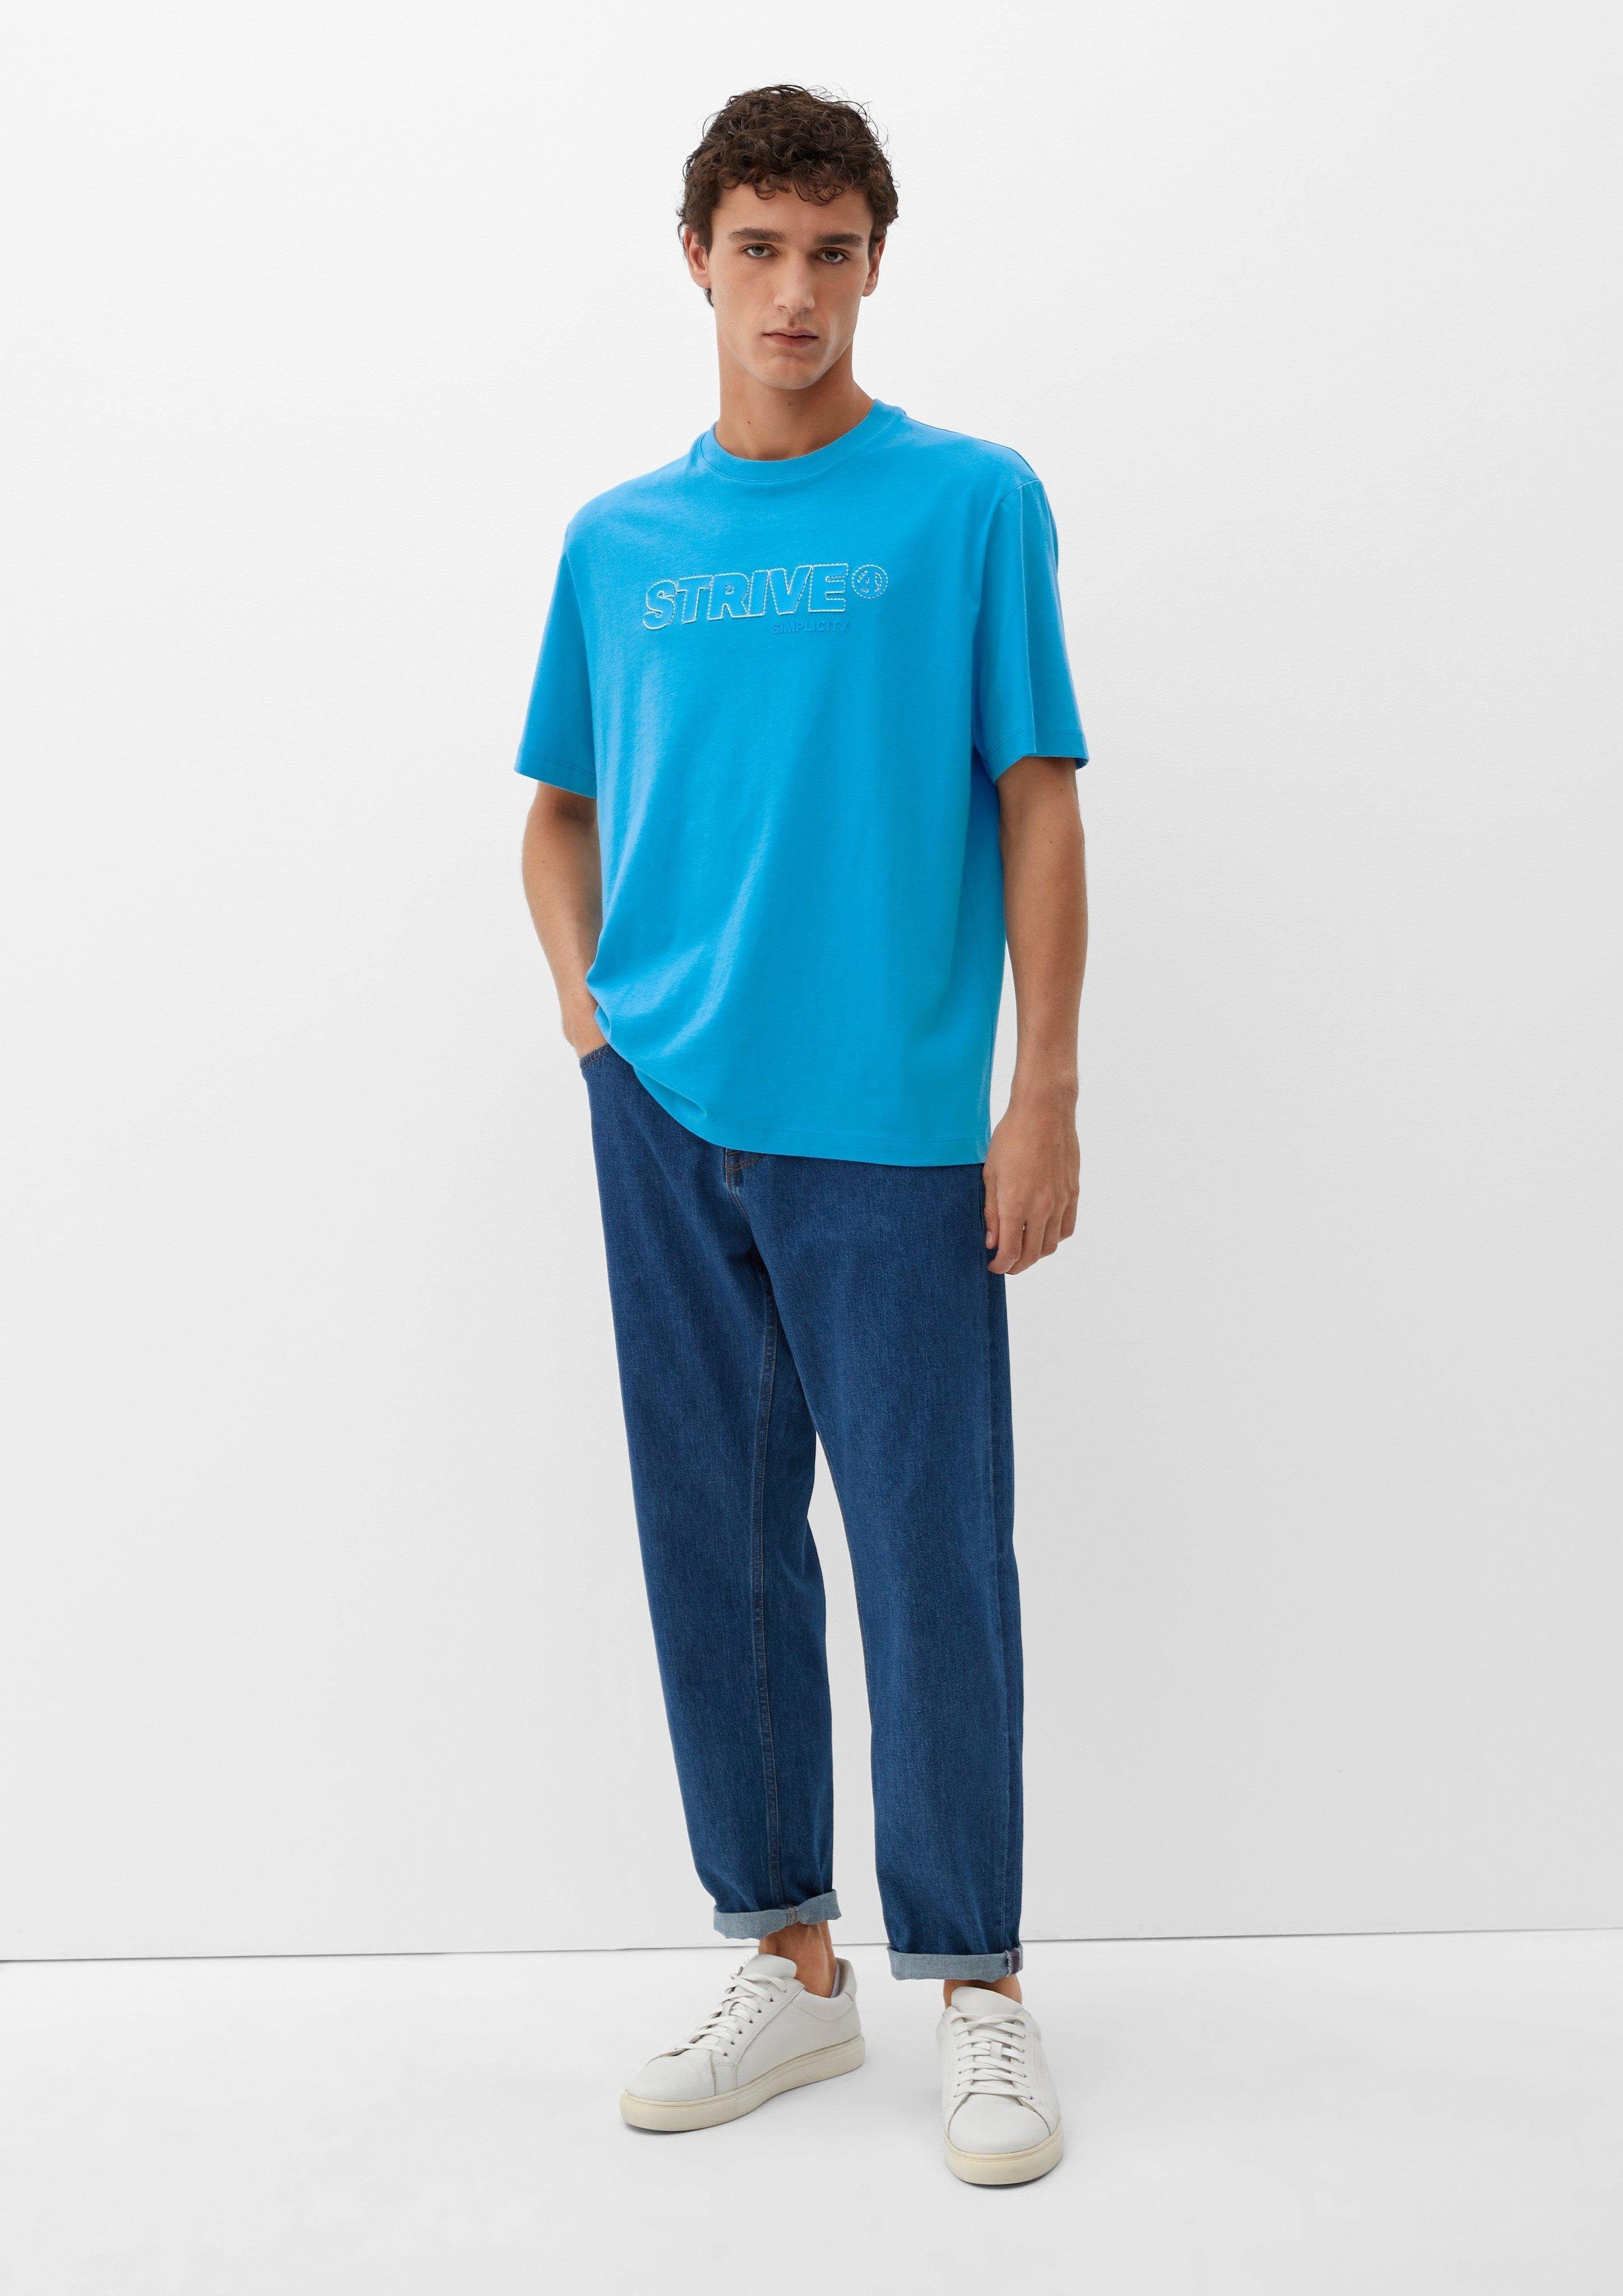 Kurzarmshirt T-Shirt türkisblau mit s.Oliver Schriftprint